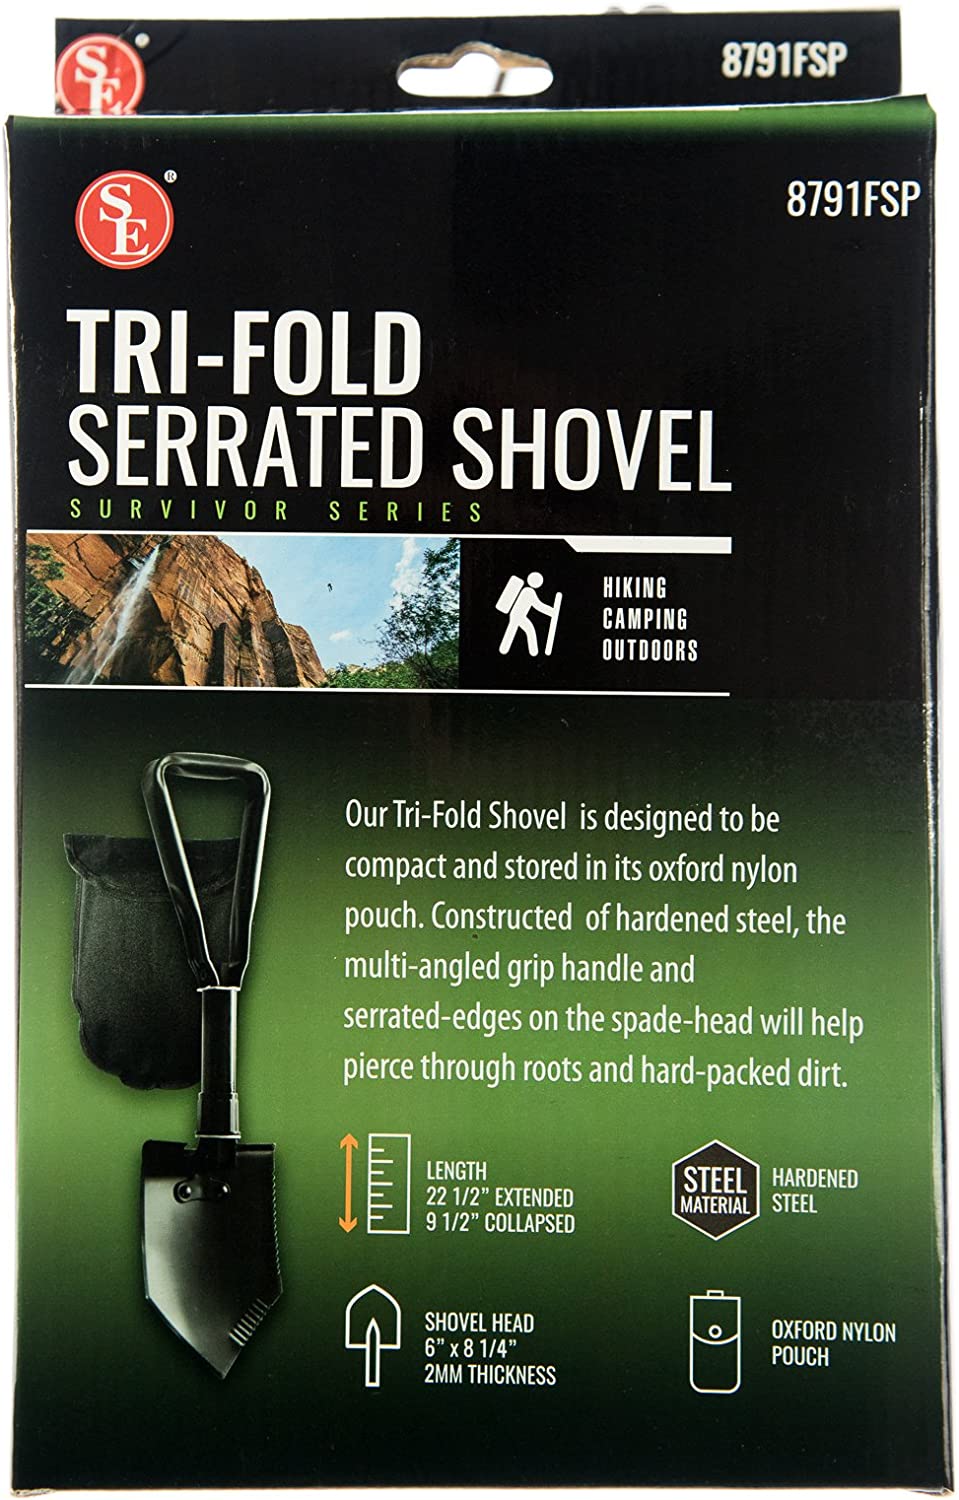 Tri-fold Serrated Shovel BeReadyFoods.com